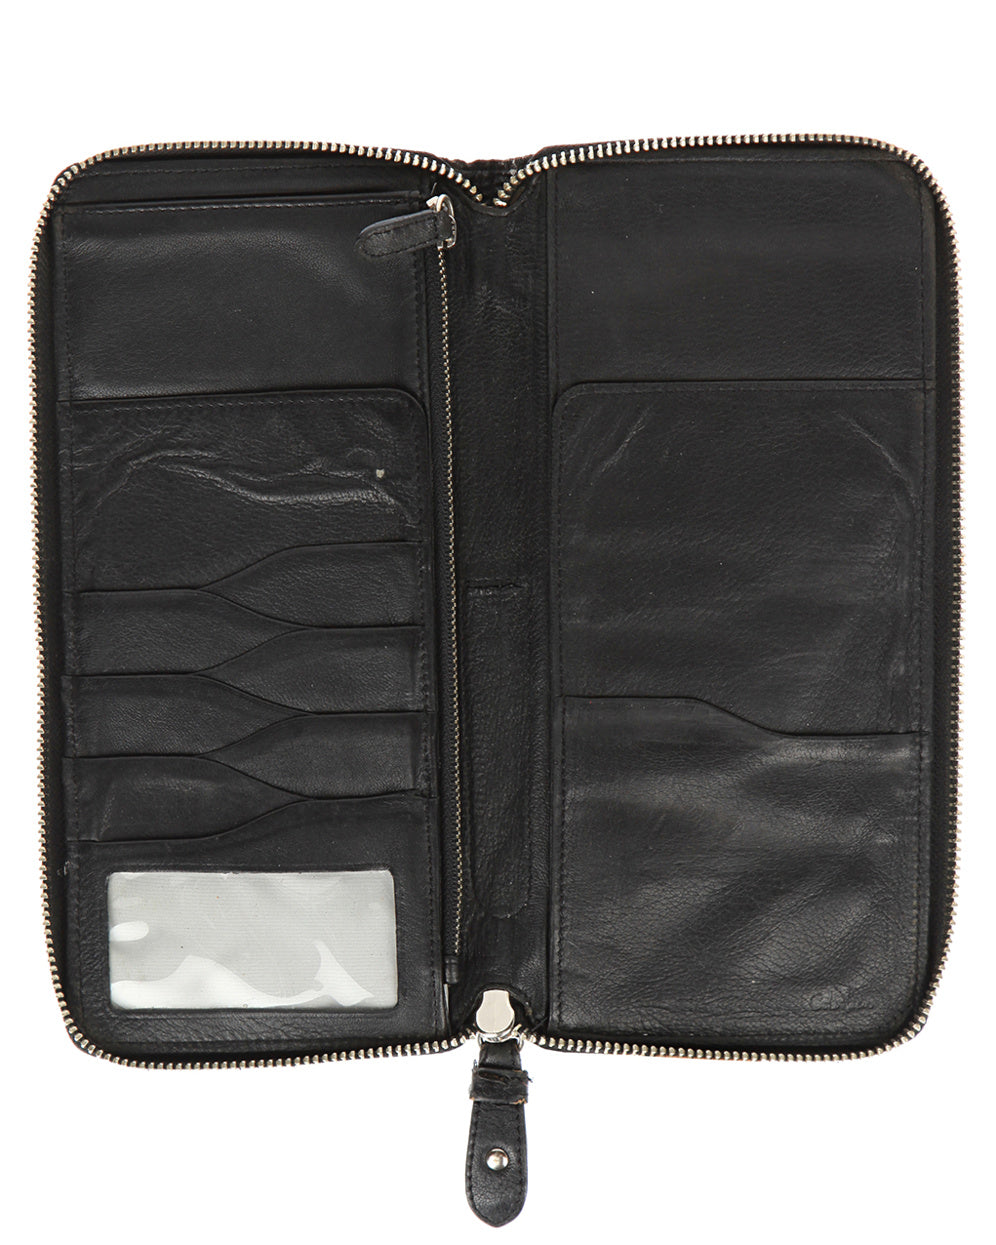 Cole Haan Black Leather Clutch Bag